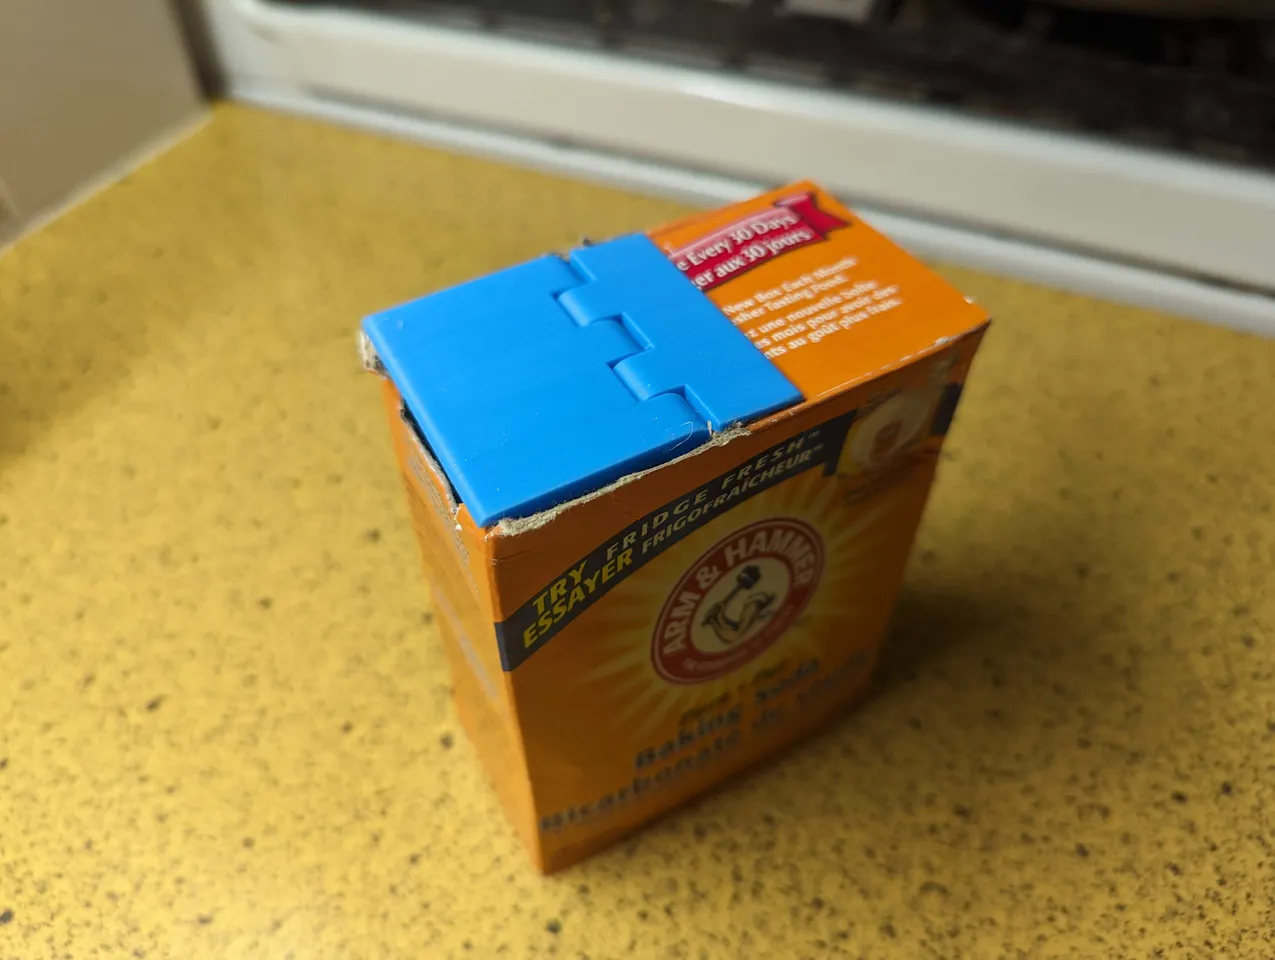 Baking Soda Box Lid v2 - With PiP hinge! by Jamehz